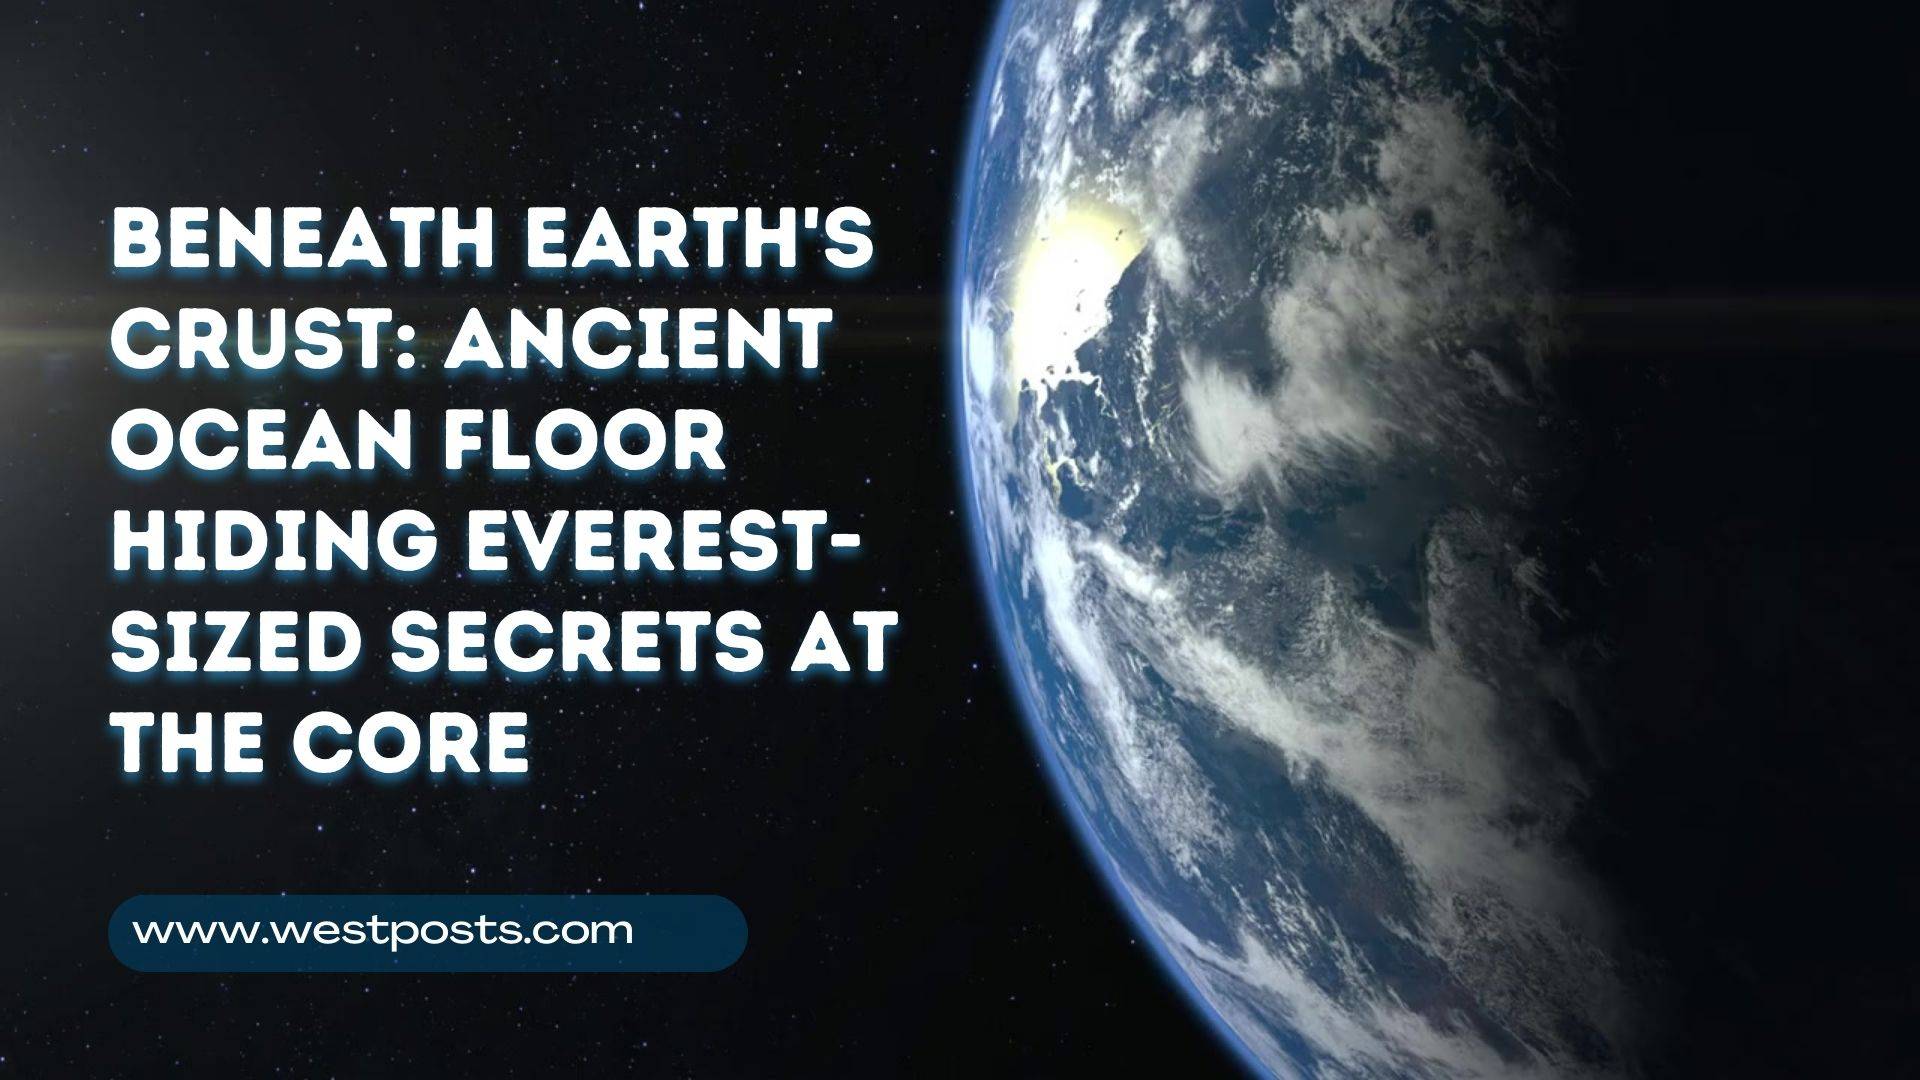 Beneath Earth's Crust: Ancient Ocean Floor Hiding Everest-Sized Secrets at The Core